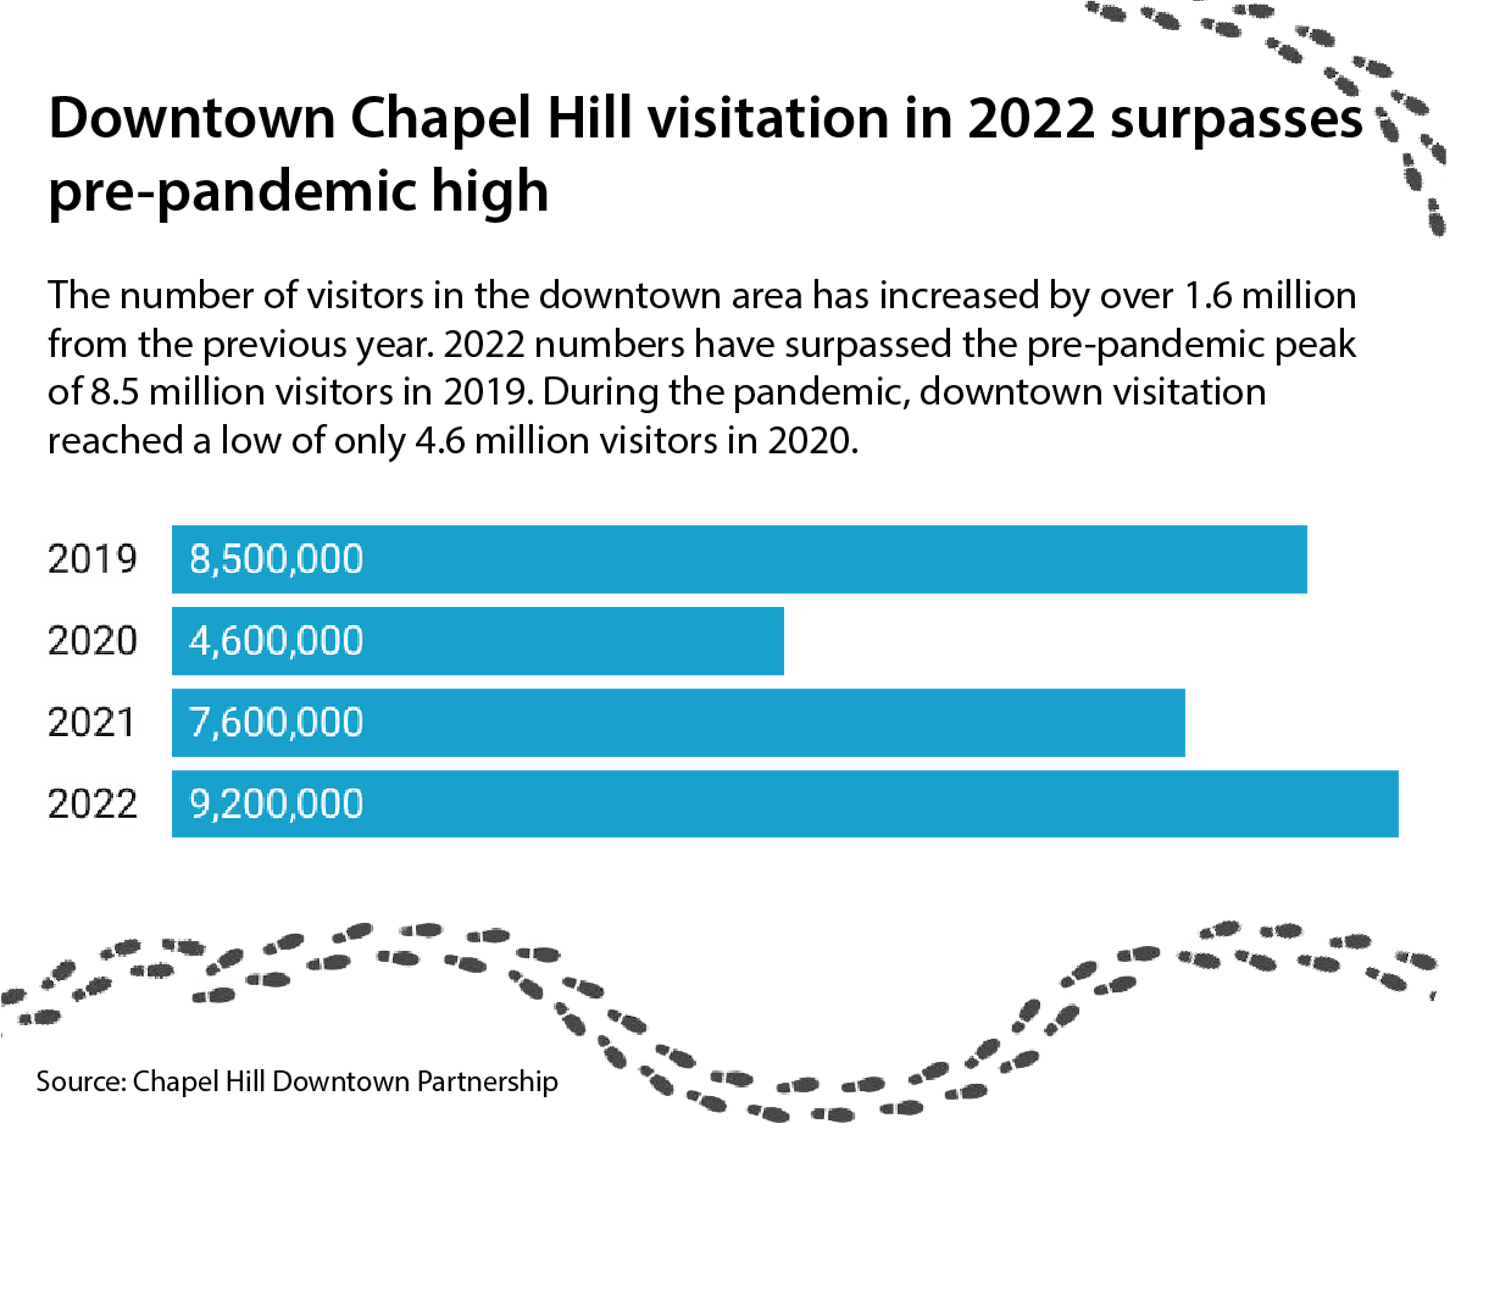 Downtown Chapel Hill visitation in 2022 surpasses pre-pandemic high